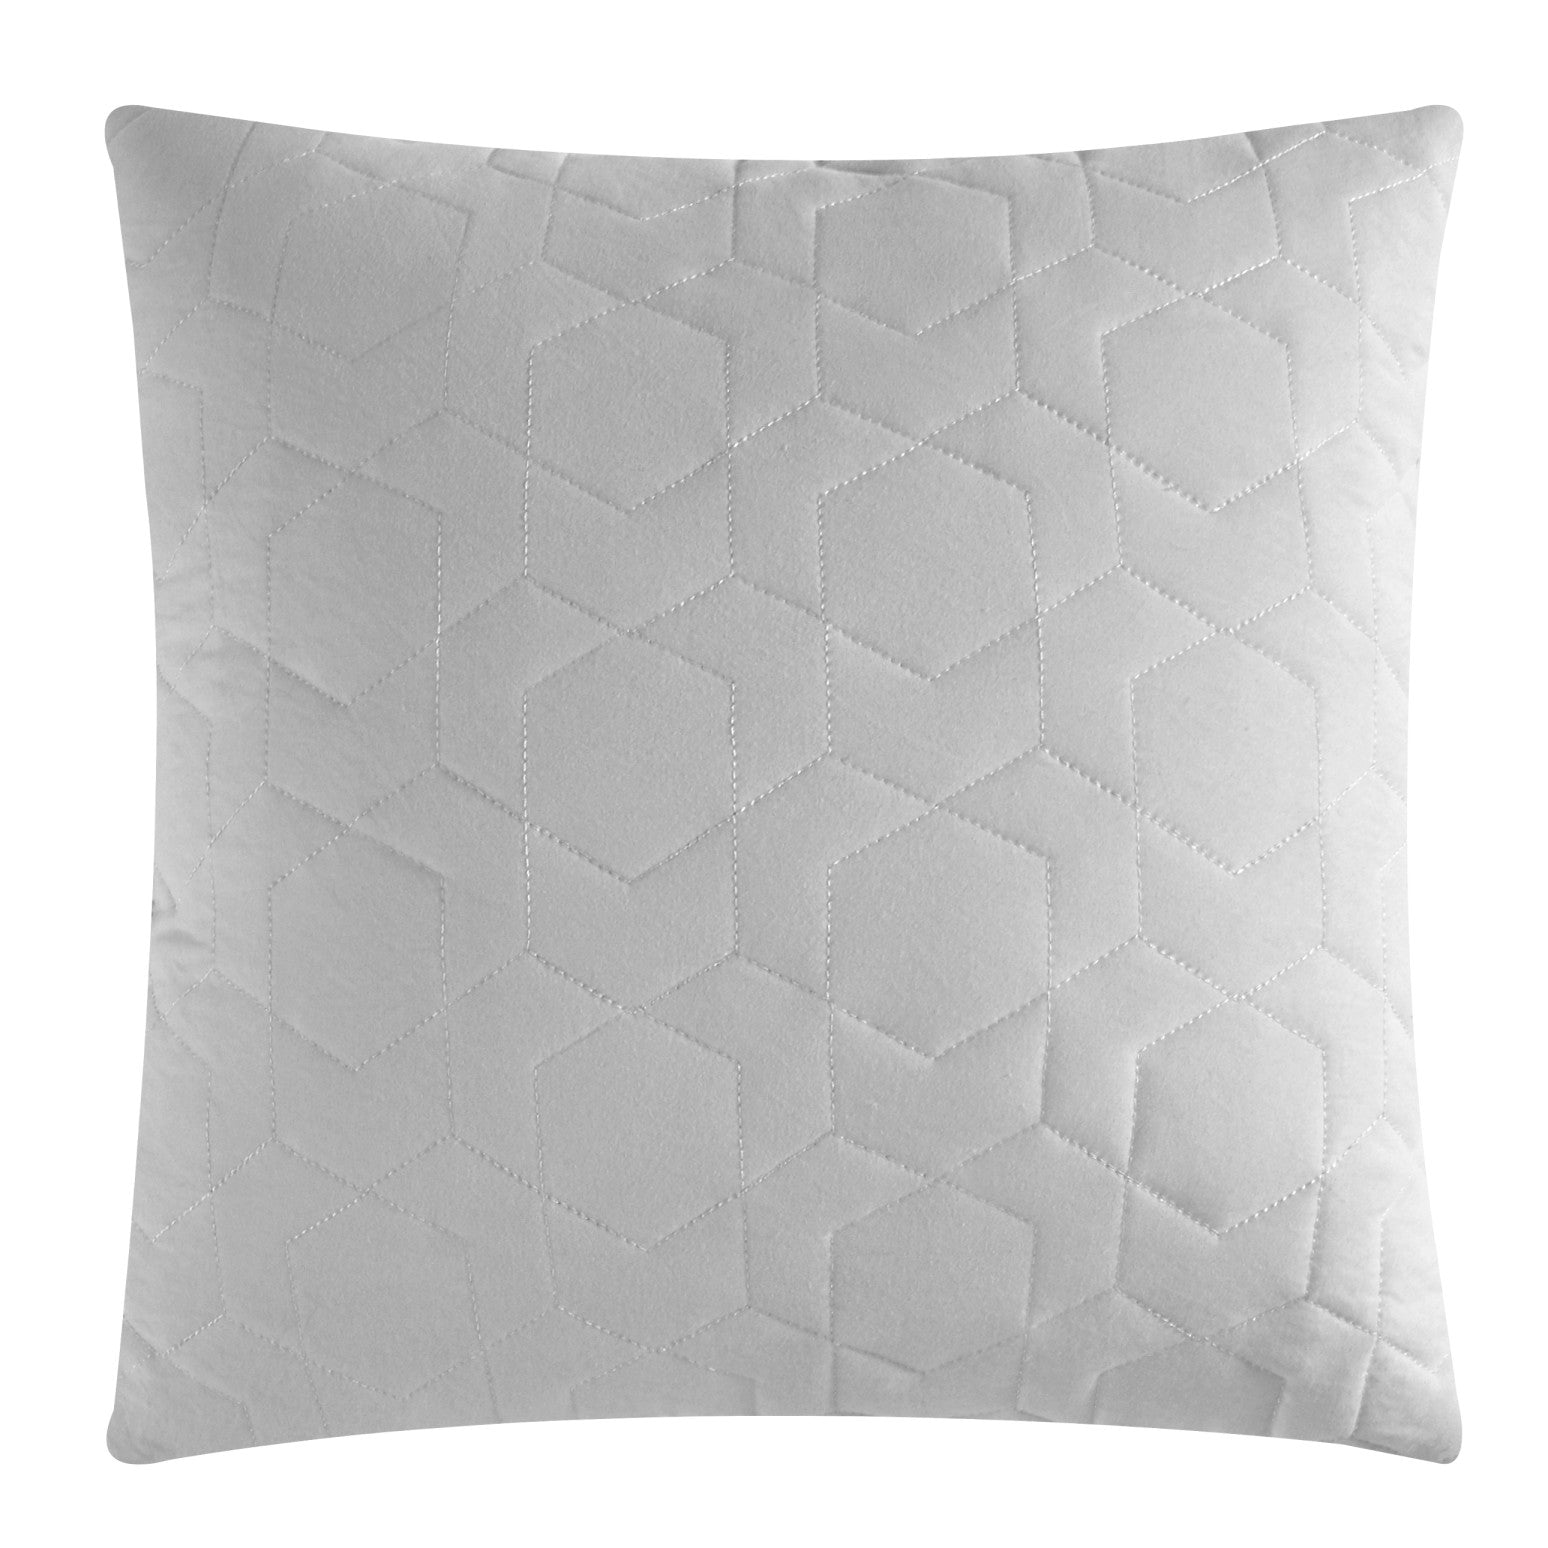 NY&C Home Davina 5 Piece Geometric Comforter Set 